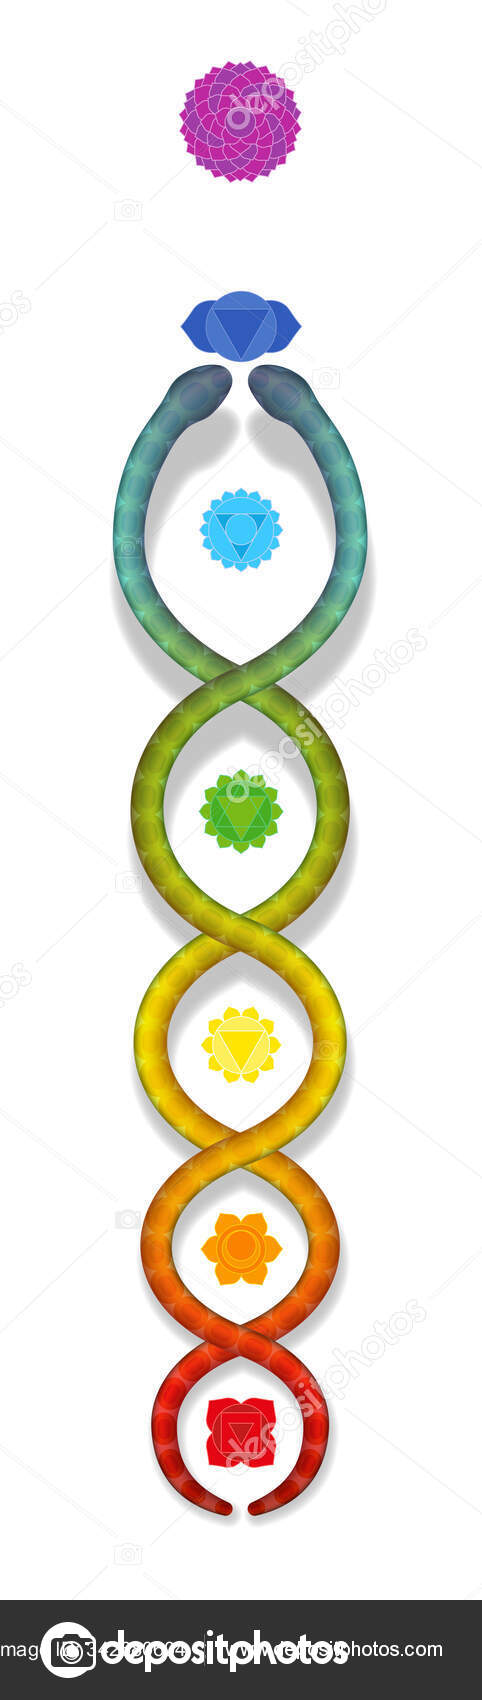 https://st3.depositphotos.com/2465573/34268/v/1600/depositphotos_342680604-stock-illustration-kundalini-serpent-ascending-along-the.jpg